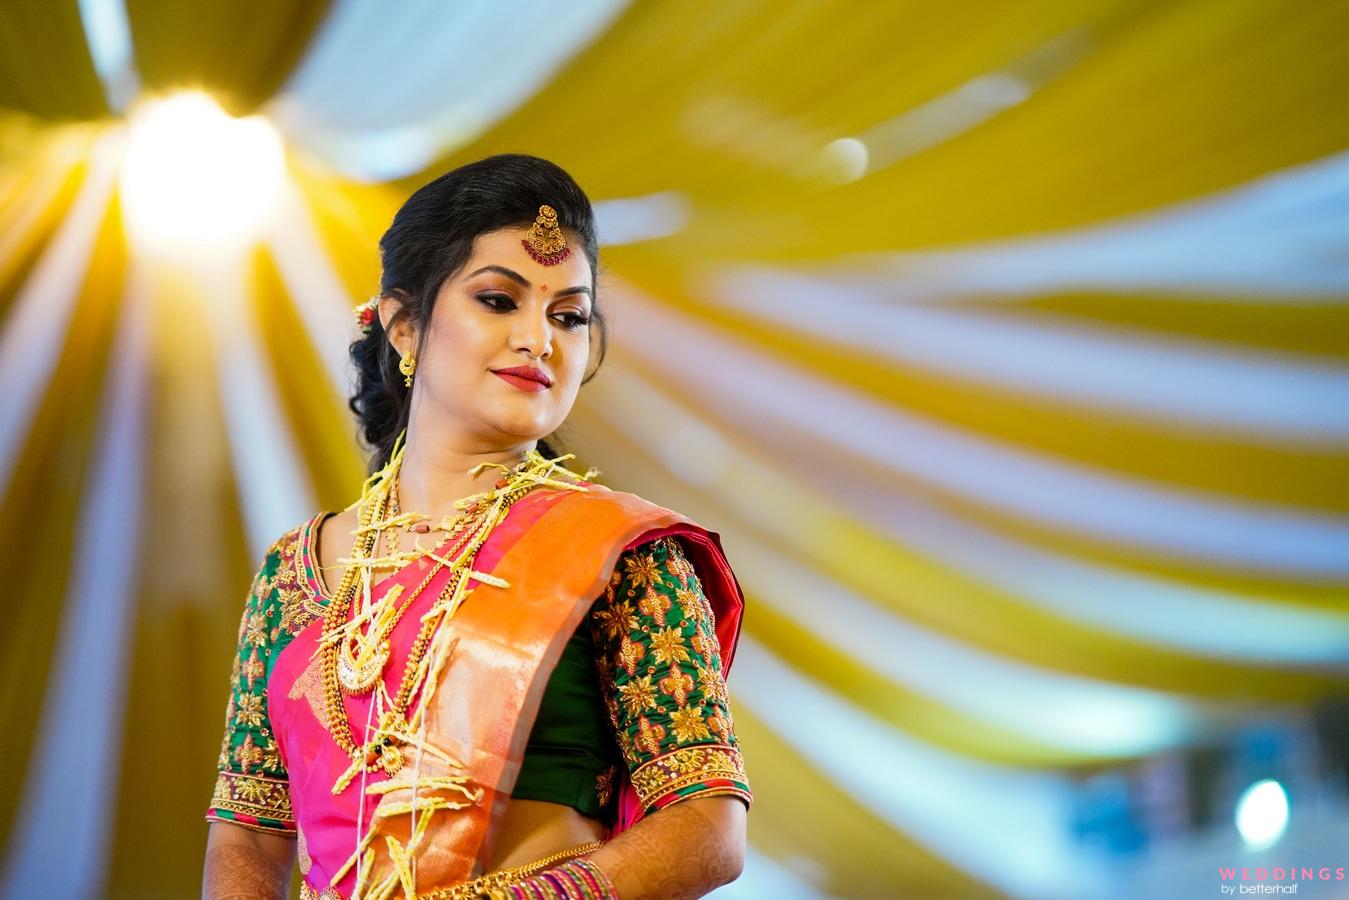 Nauvari look | Bride makeup, Marathi bride, Saree poses